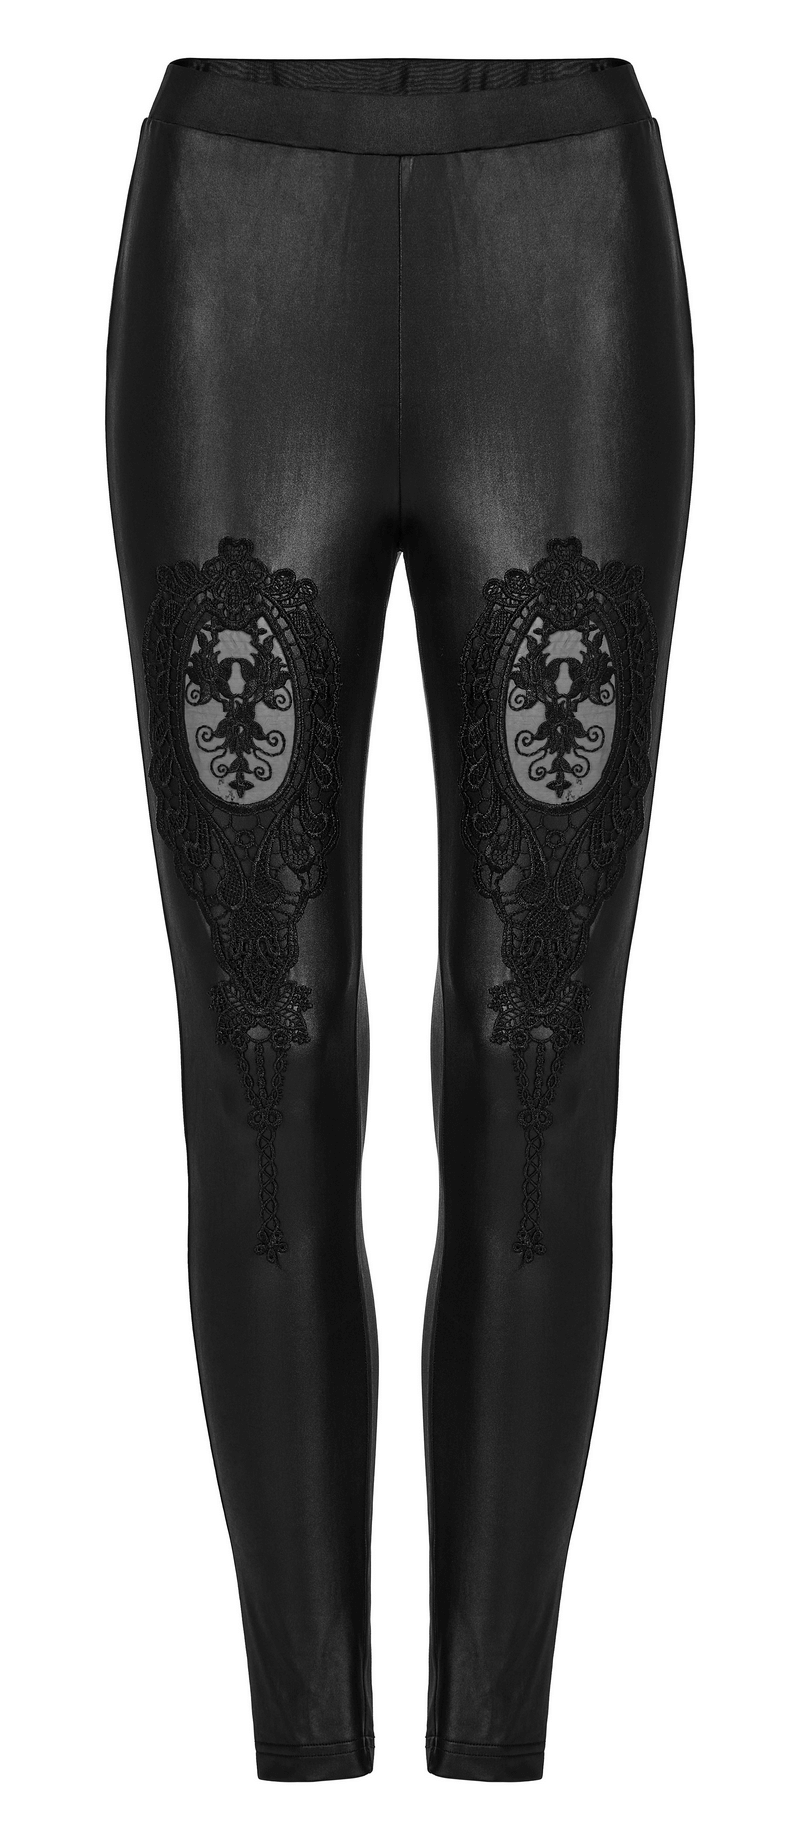 Lace Detail High-Waist Black Gothic Leggings for Women - HARD'N'HEAVY